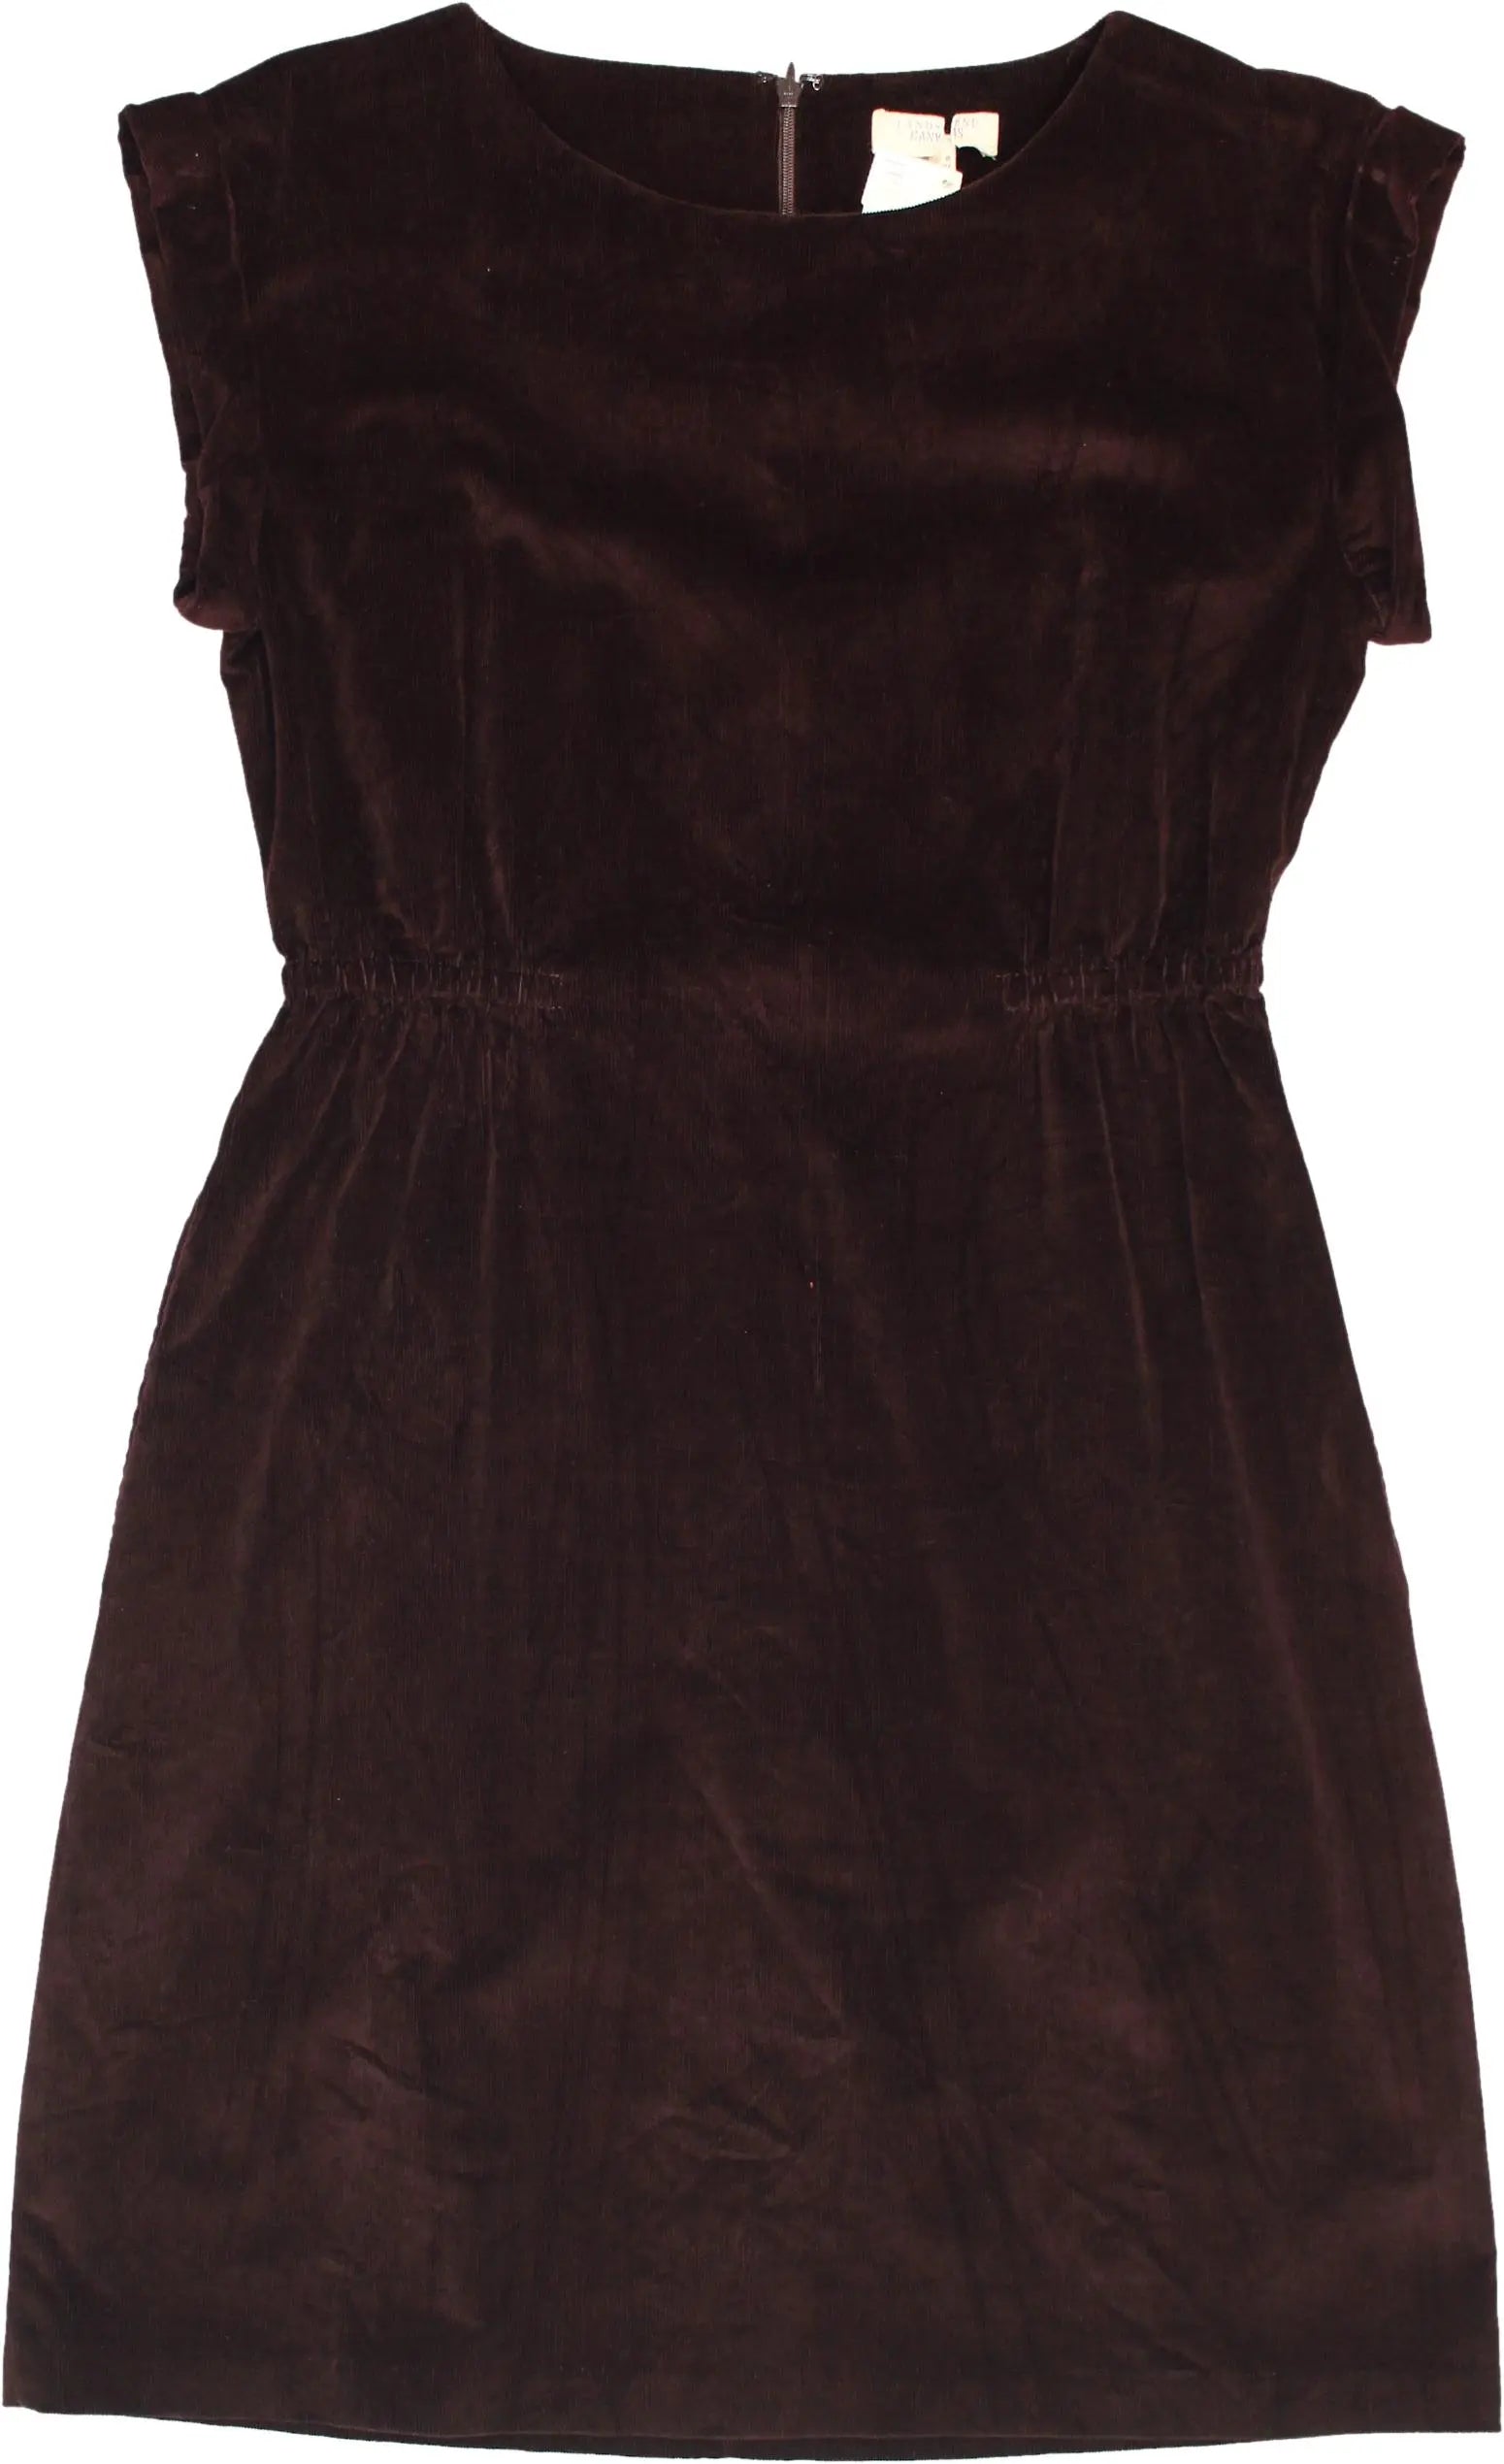 Lands' End - Corduroy Dress- ThriftTale.com - Vintage and second handclothing